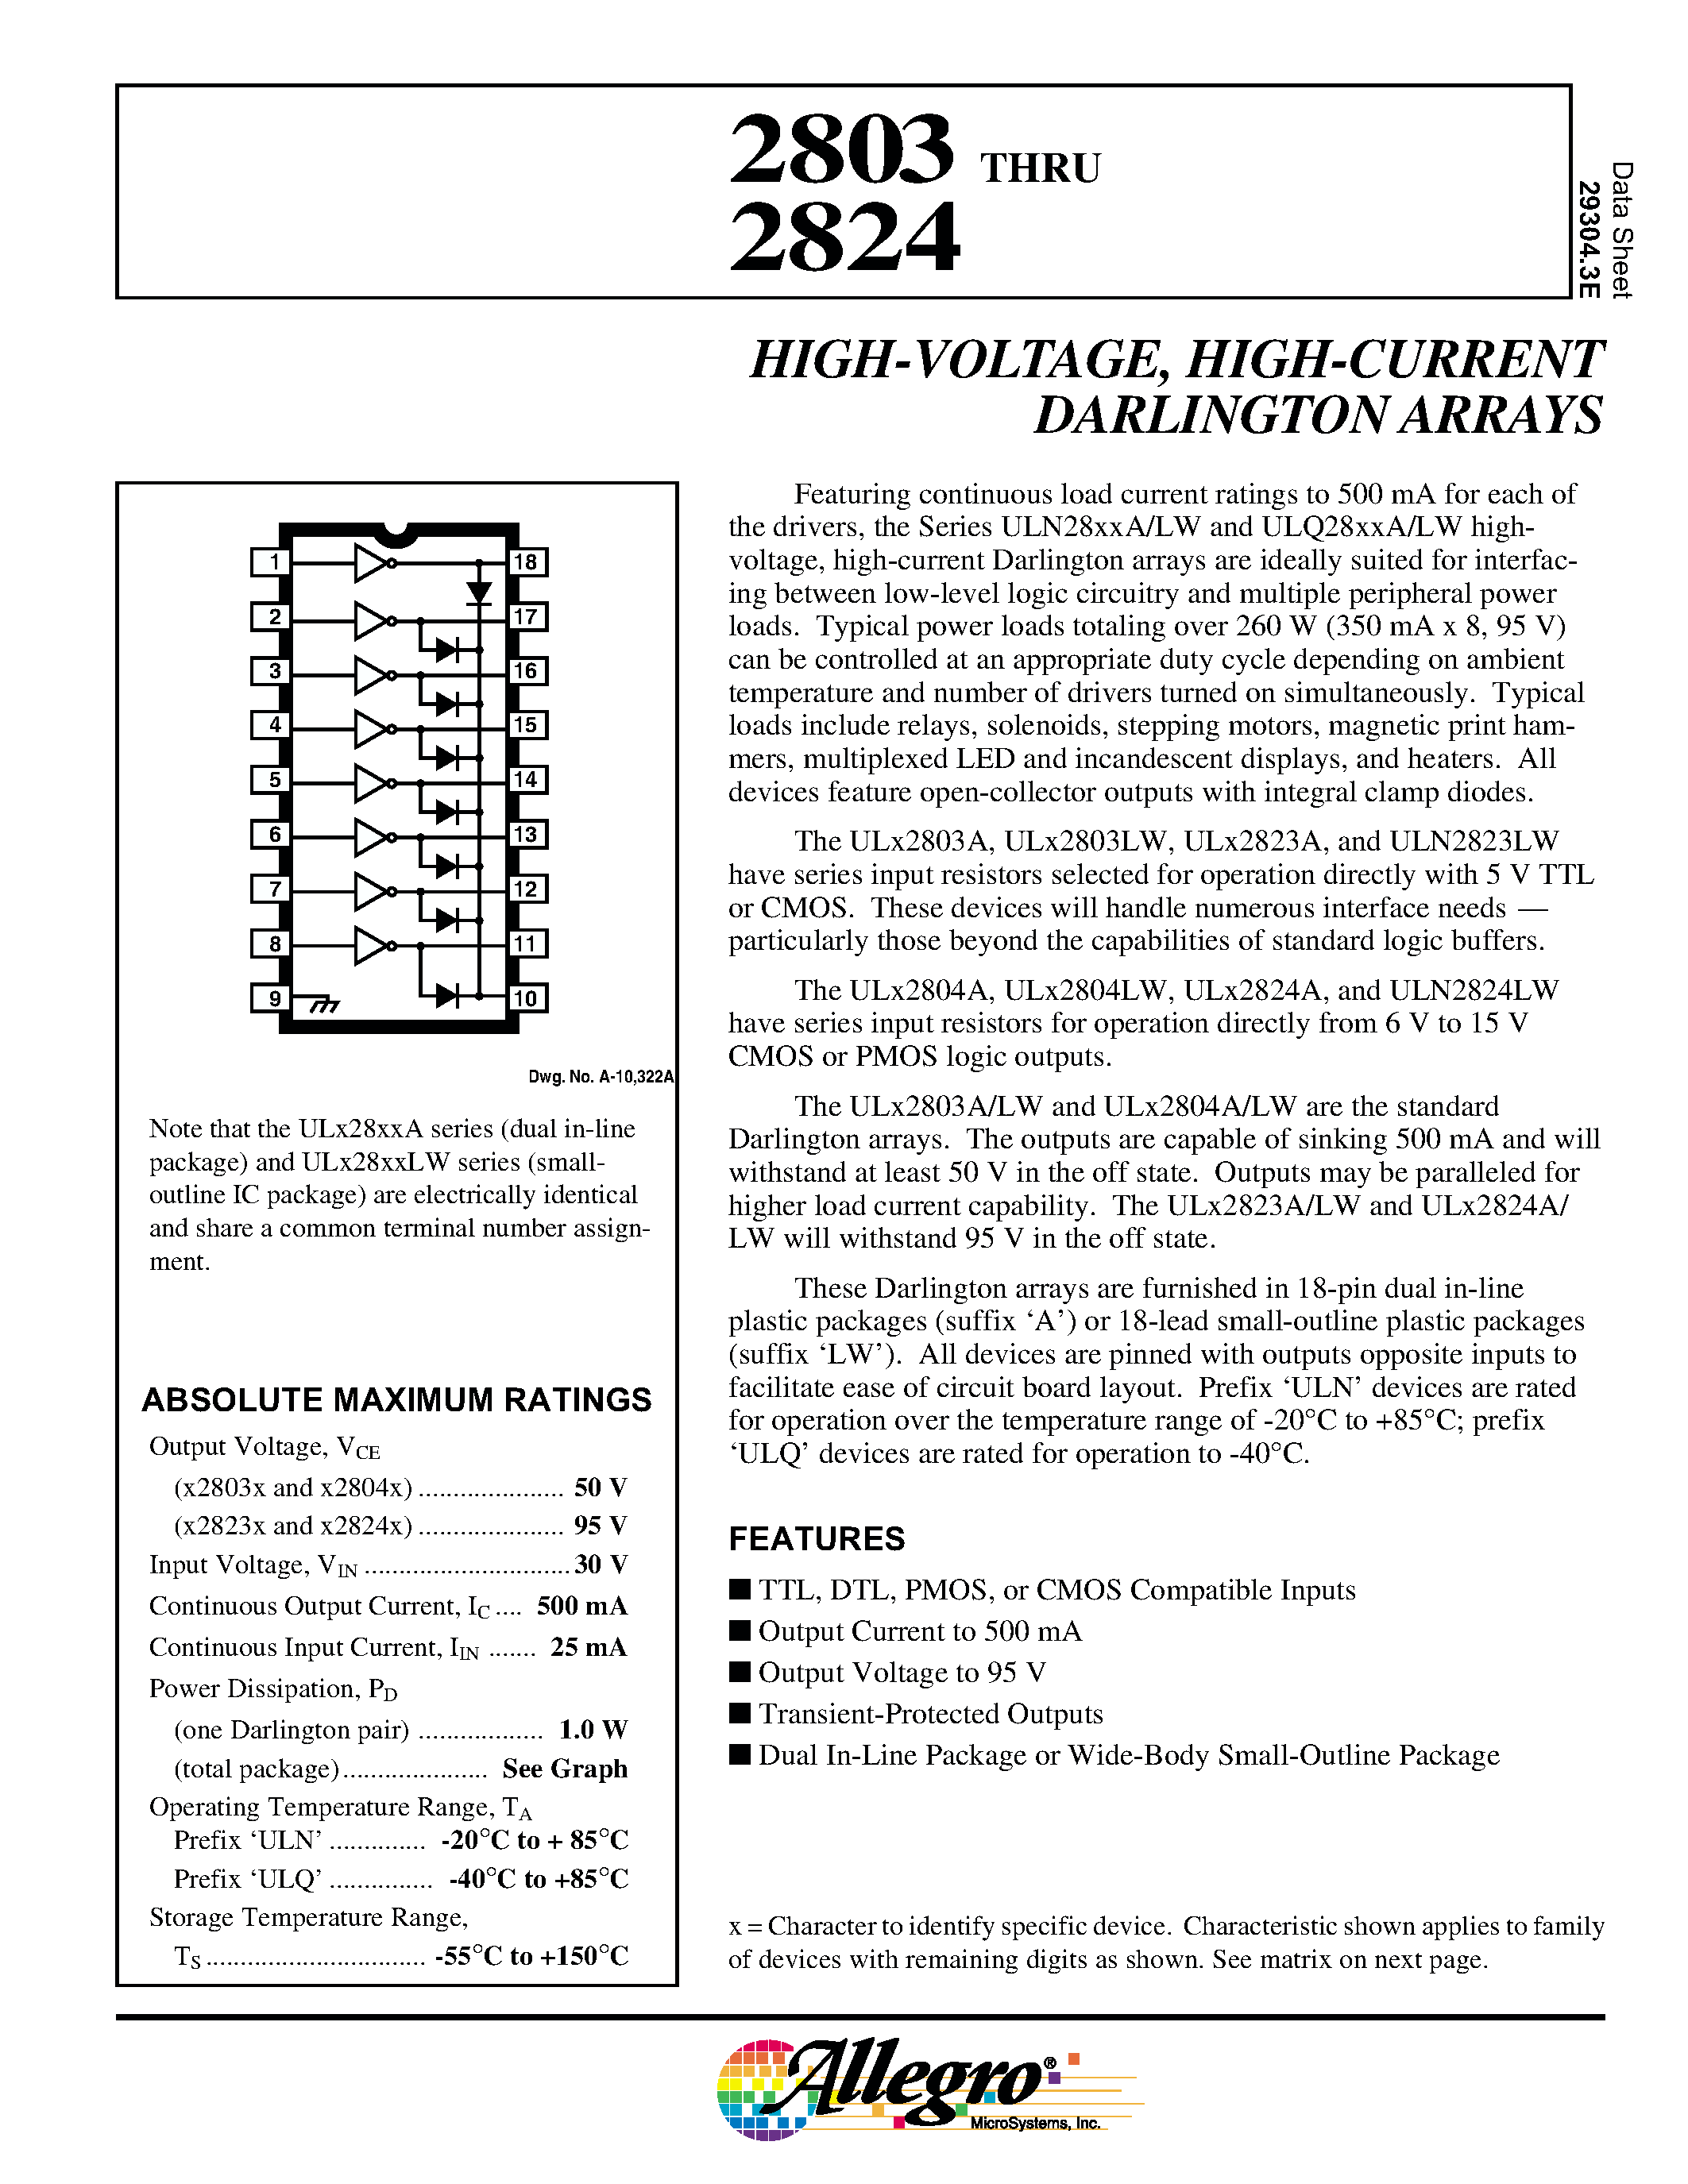 Datasheet ULN2804LW - HIGH-VOLTAGE/ HIGH-CURRENT DARLINGTON ARRAYS page 1